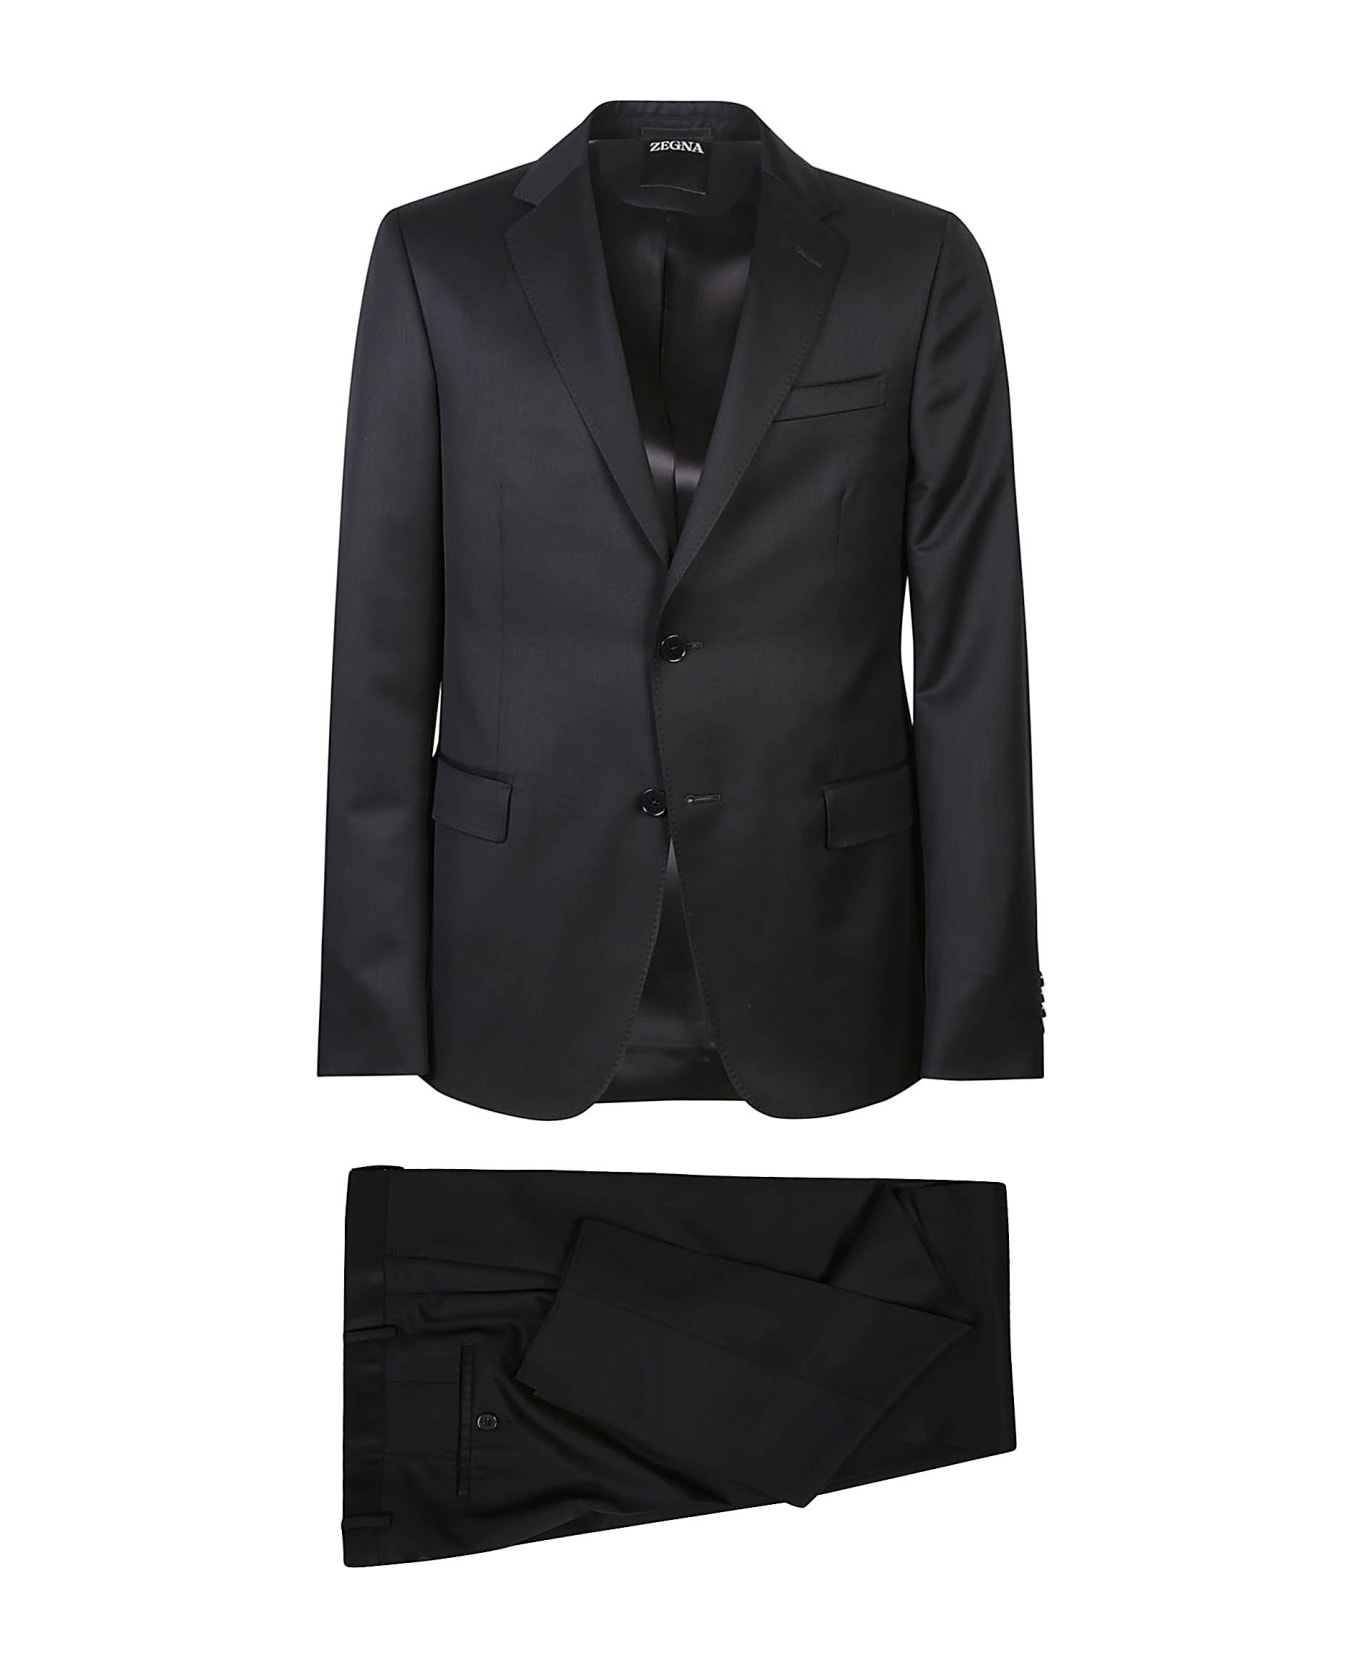 Zegna Suit - Nero